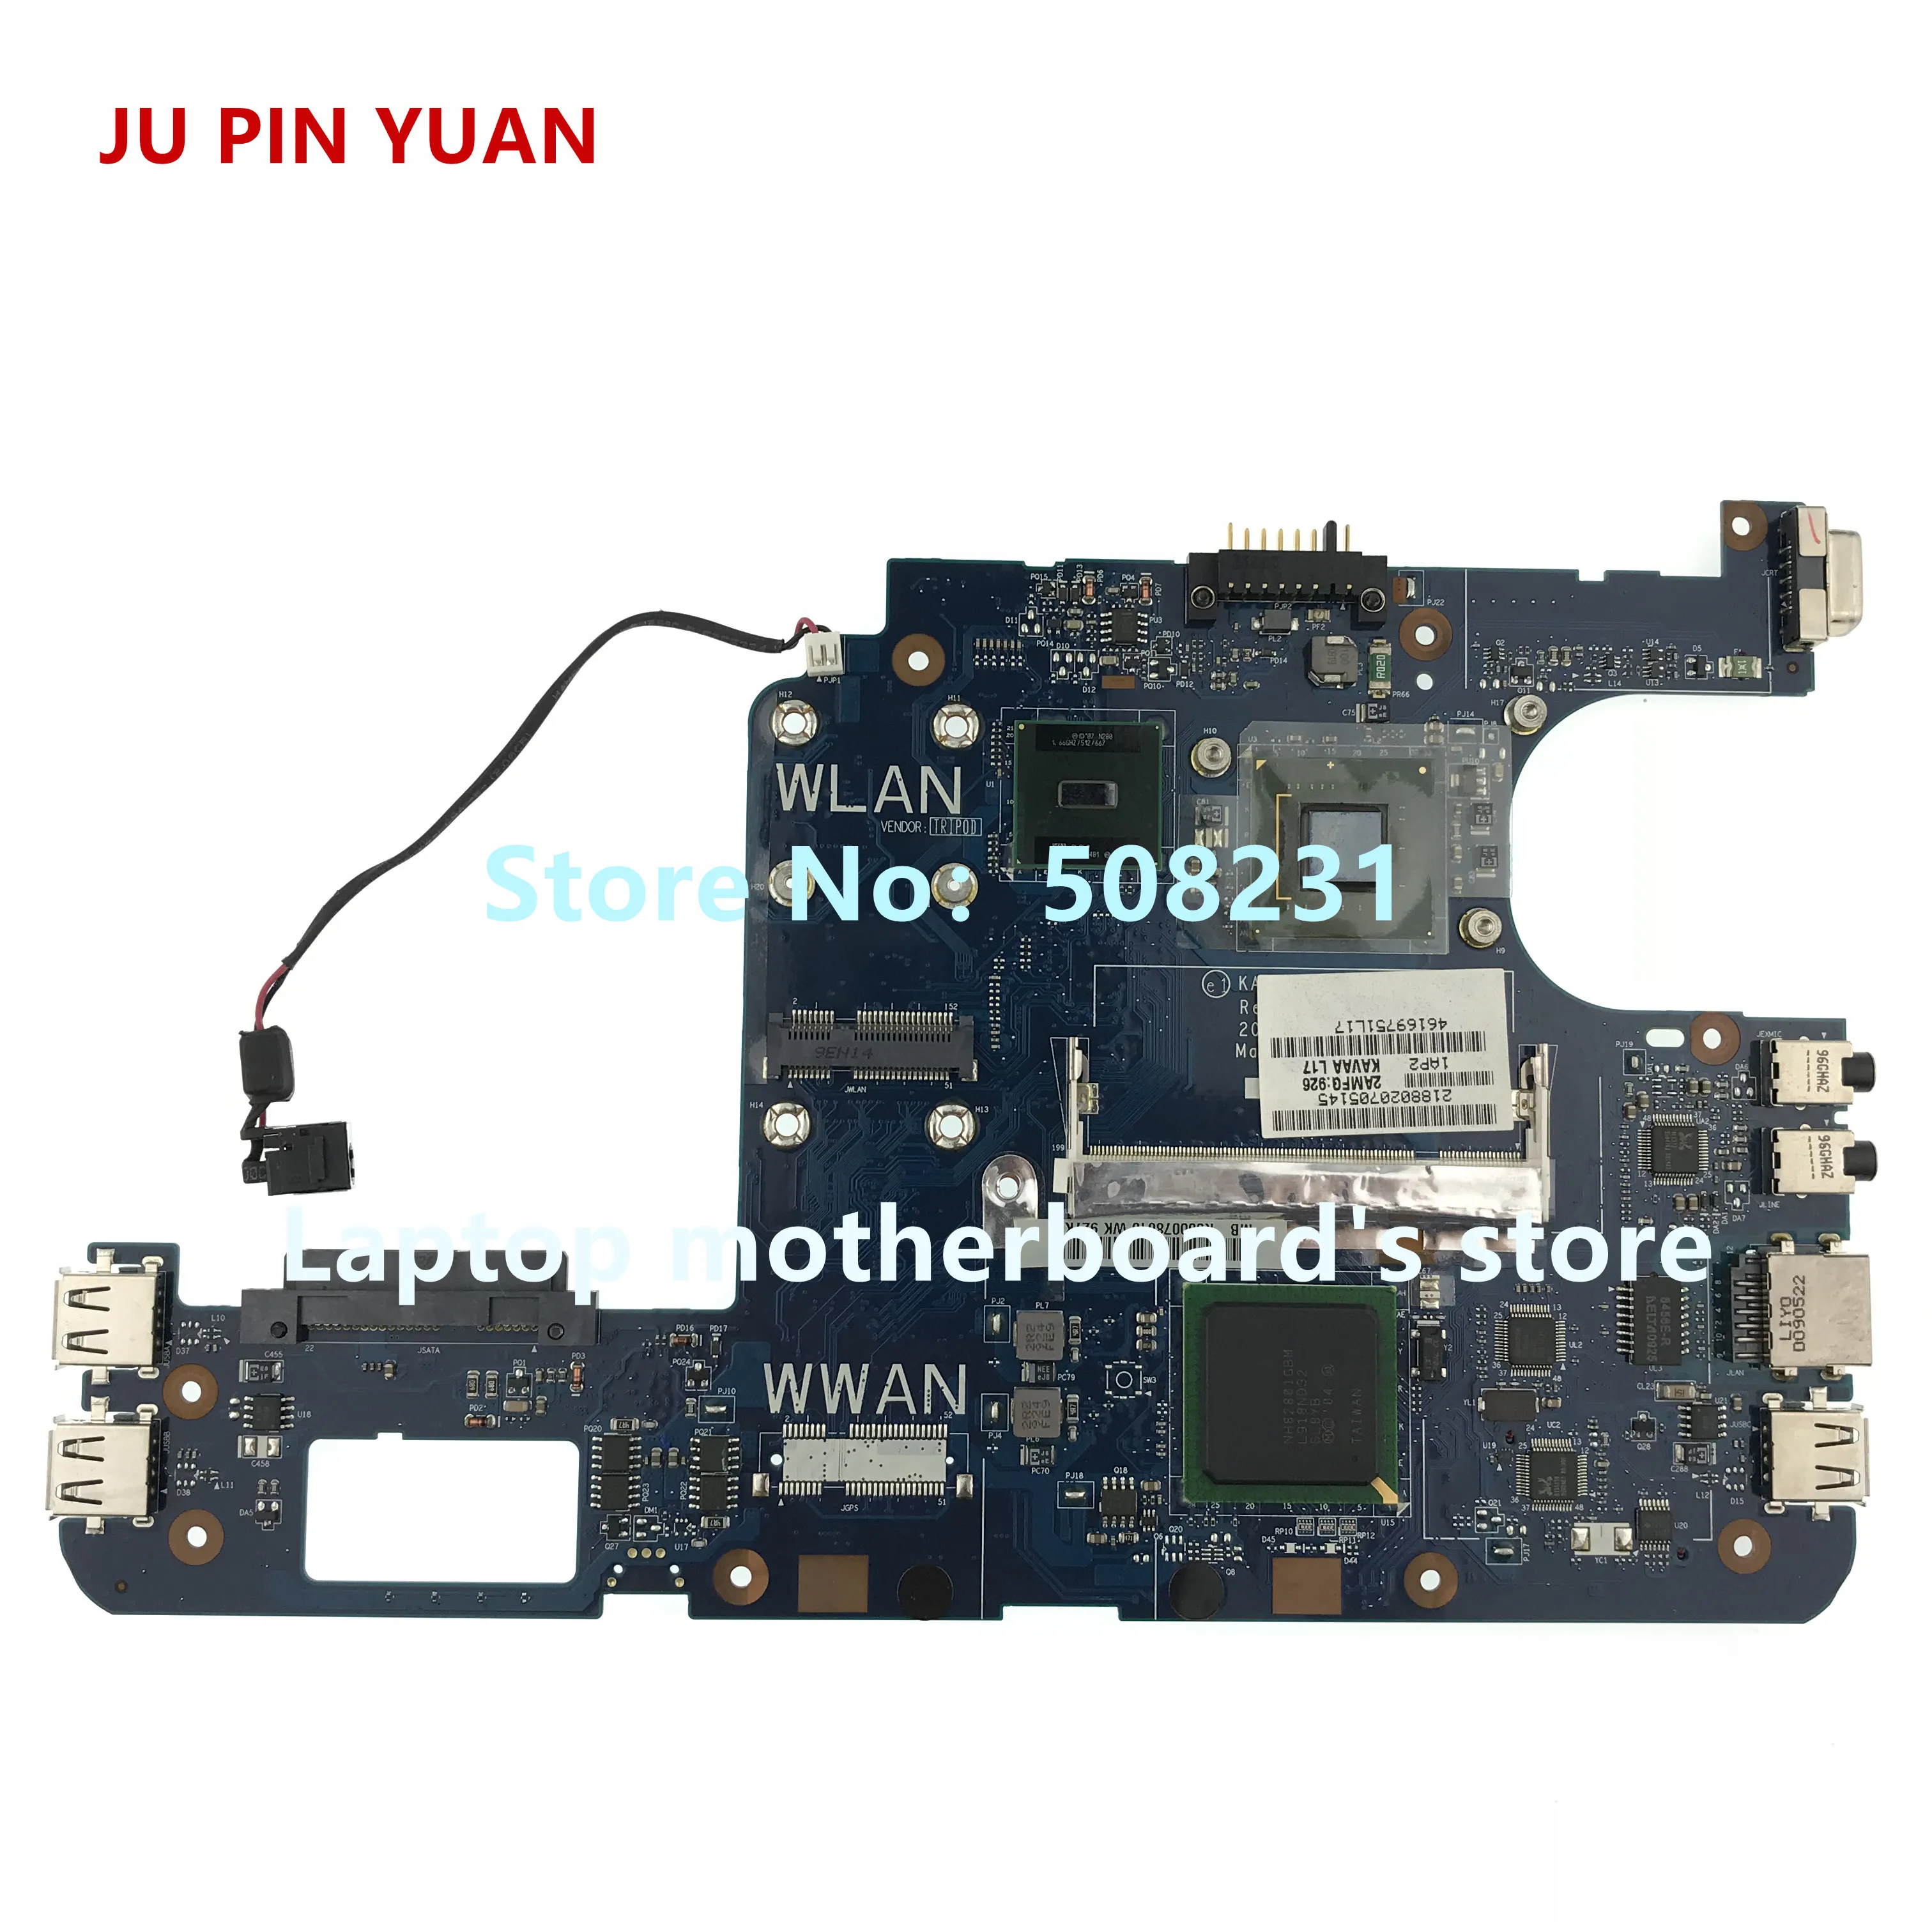 Ju pin yuan для Toshiba Mini NB205 NB200 материнская плата для ноутбука K000078610 KAVAA LA-5121P с N280 все функции полностью протестированы